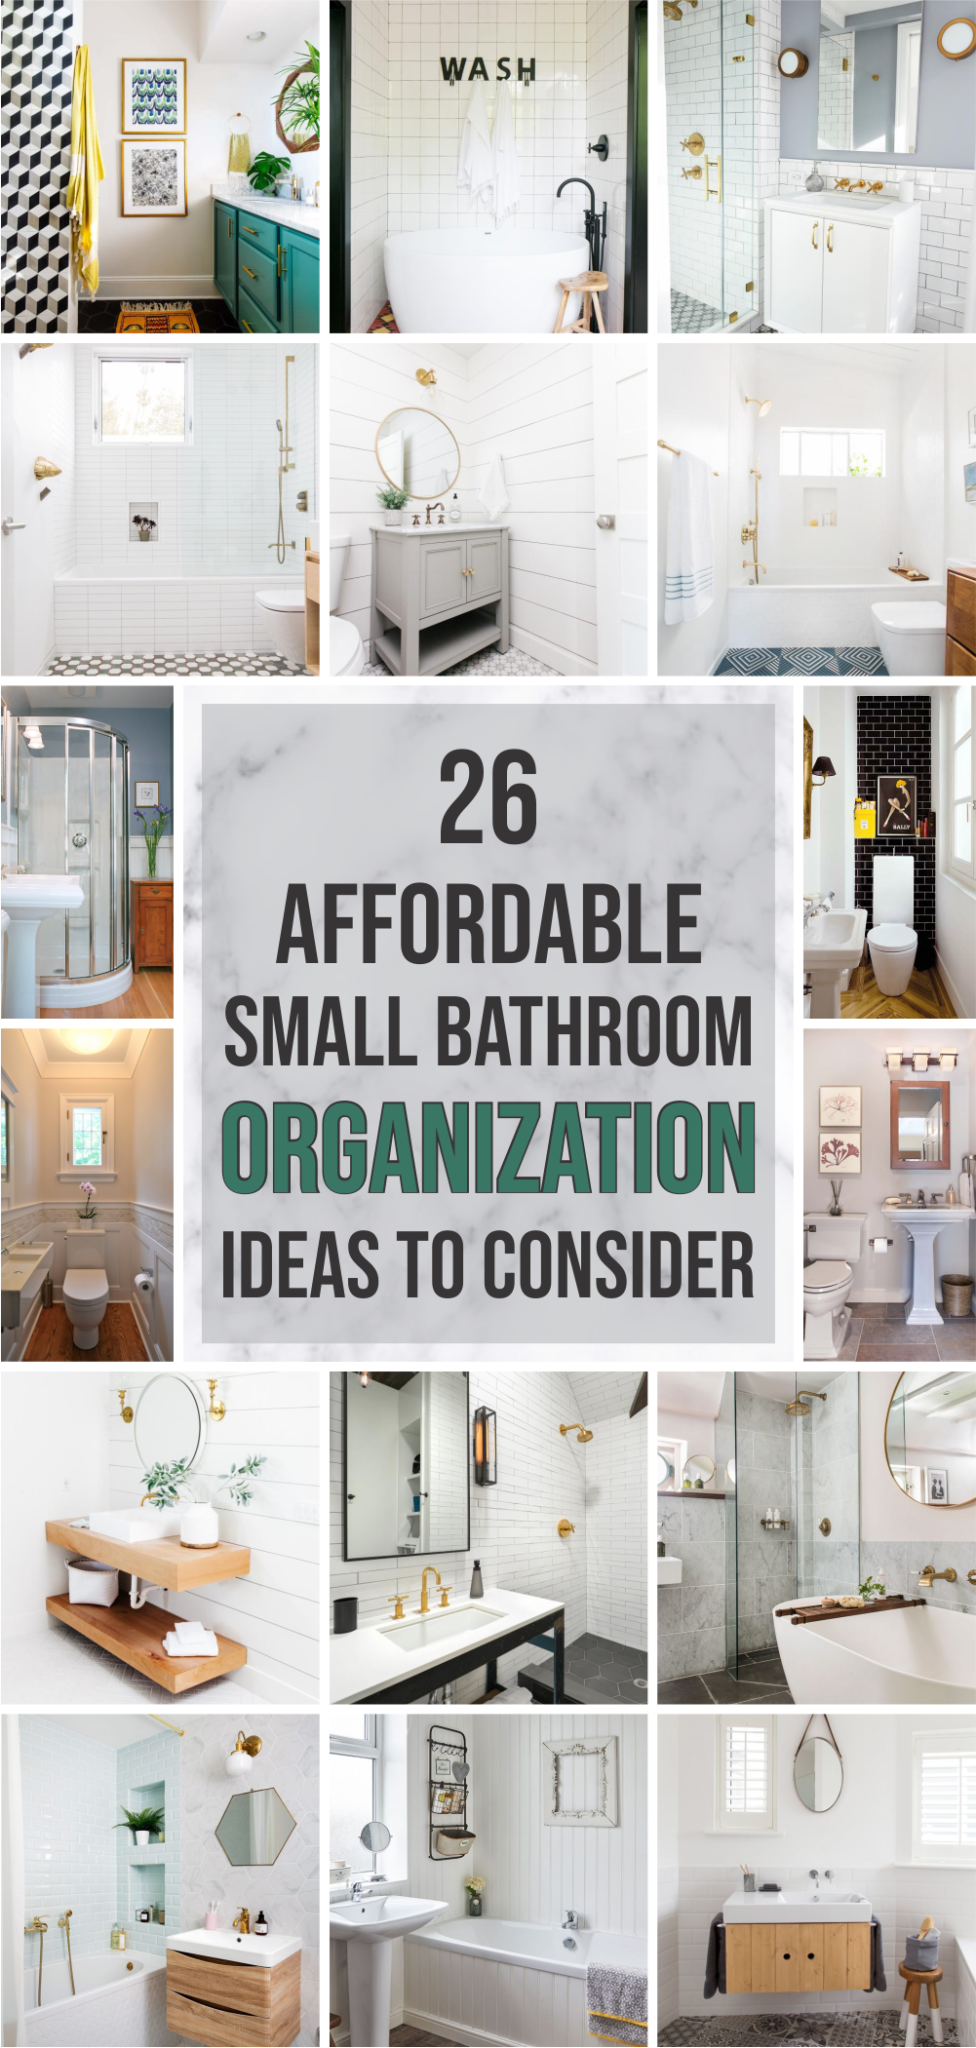 26 Affordable Small Bathroom Organization Ideas to Consider - Talkdecor